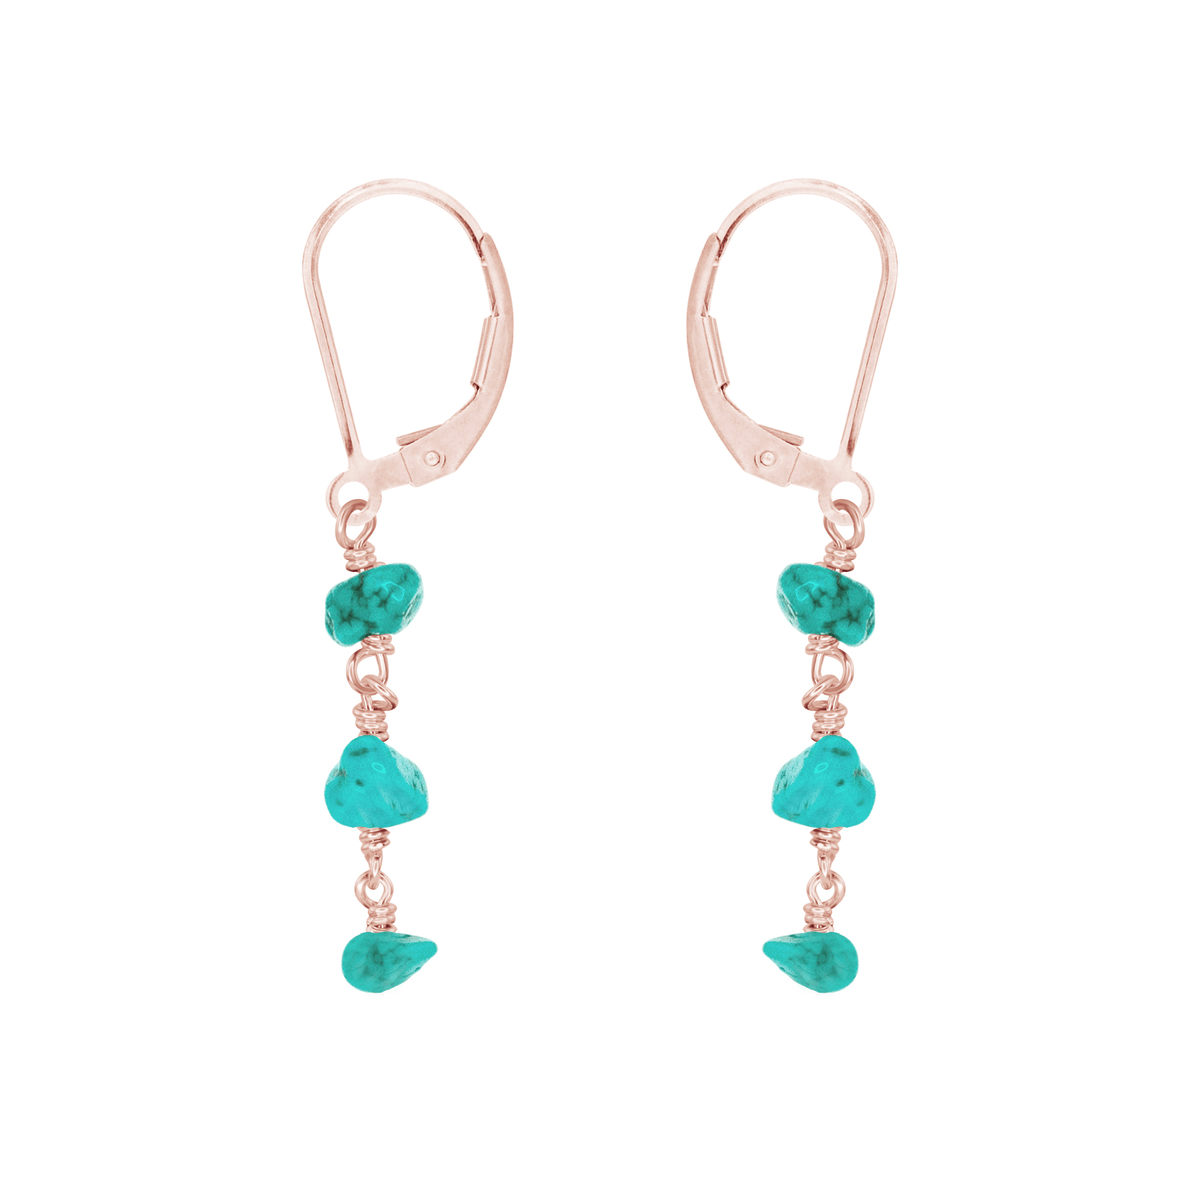 Turquoise Crystal Beaded Chain Dangle Leverback Earrings - Turquoise Crystal Beaded Chain Dangle Leverback Earrings - 14k Rose Gold Fill - Luna Tide Handmade Crystal Jewellery